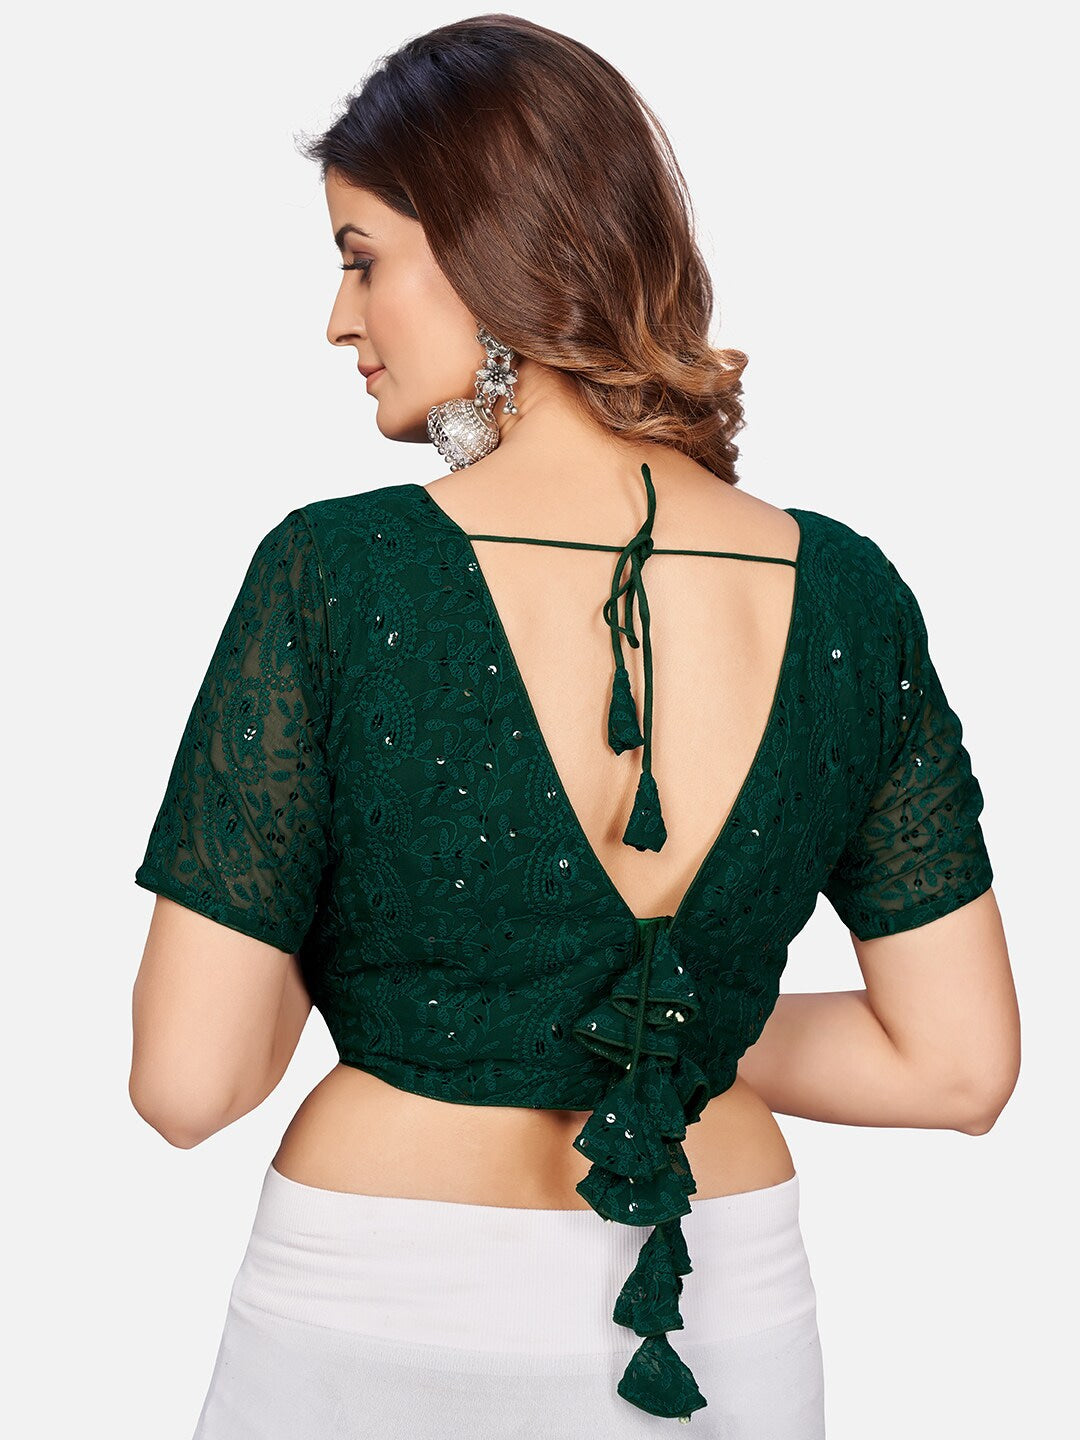 Green Embroidered Chikankari Saree Blouse For Women